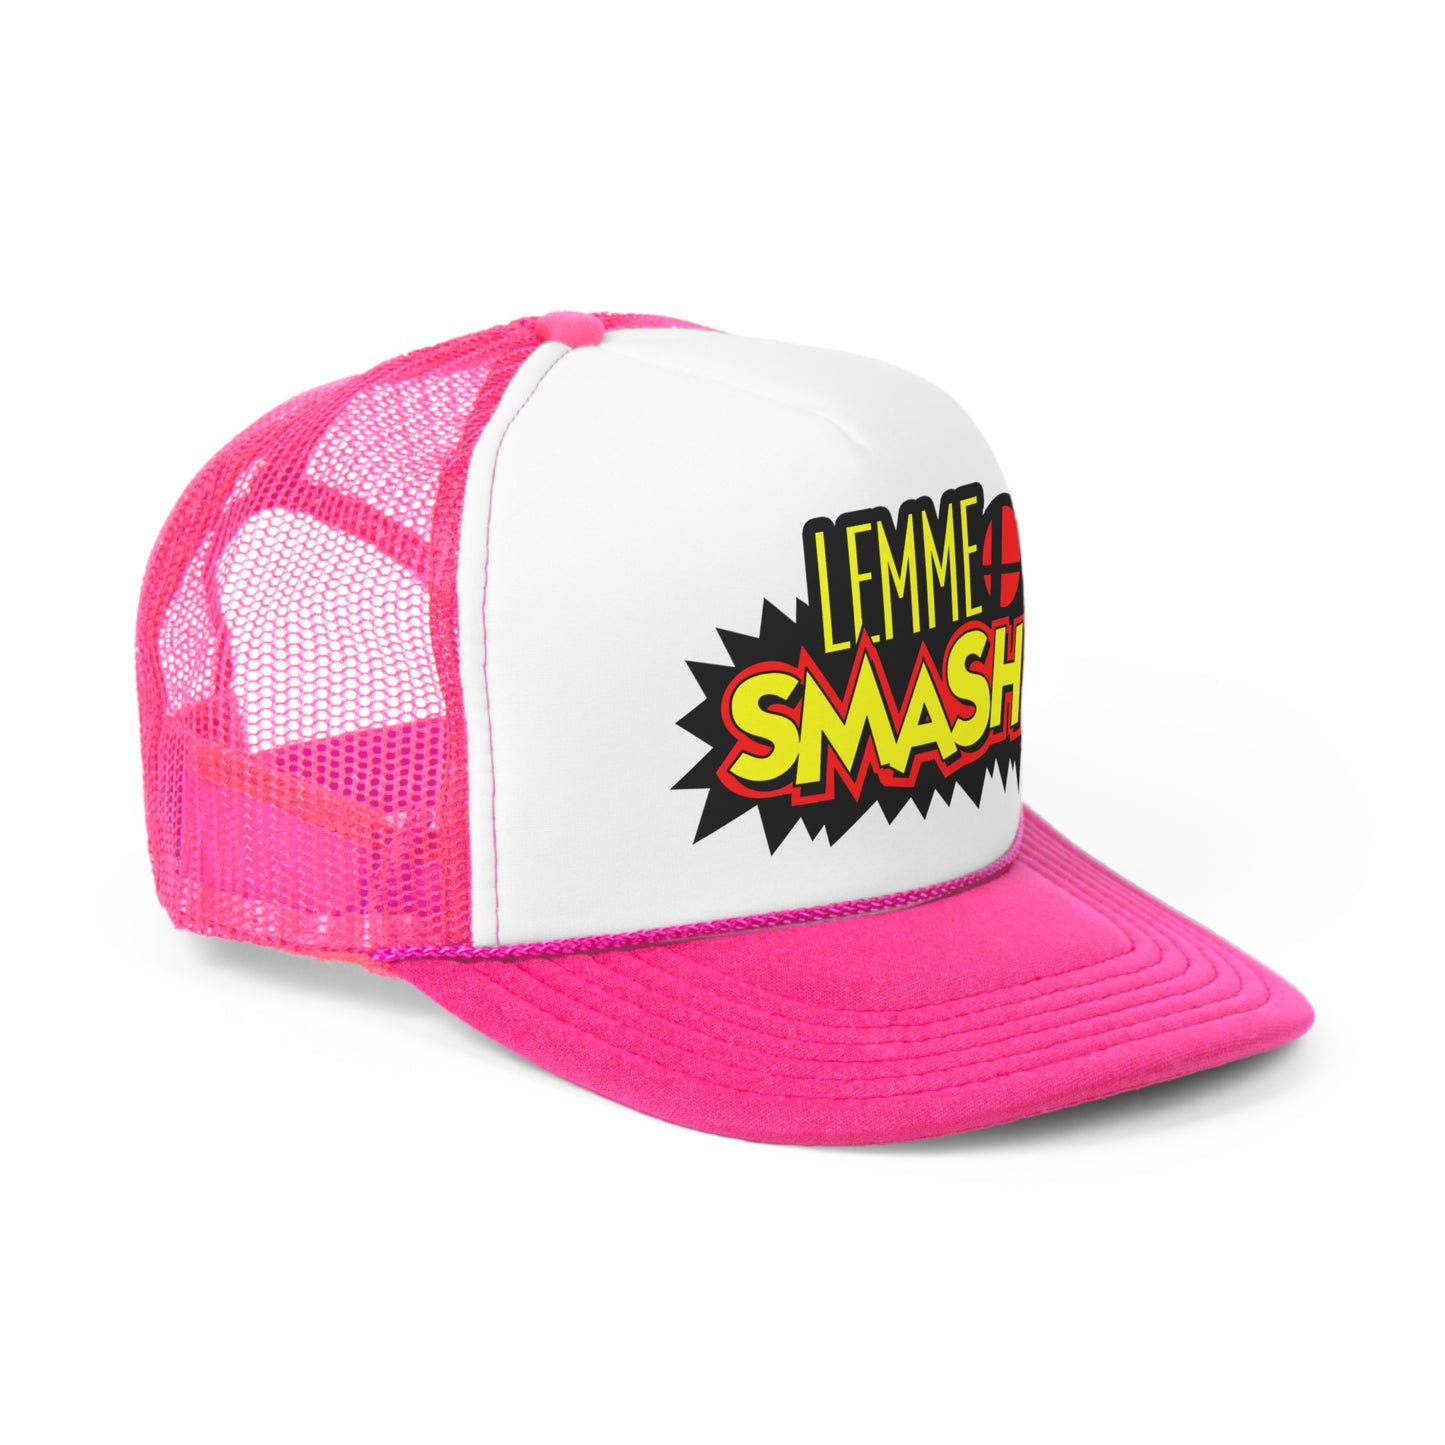 Lemme Smash trucker hat